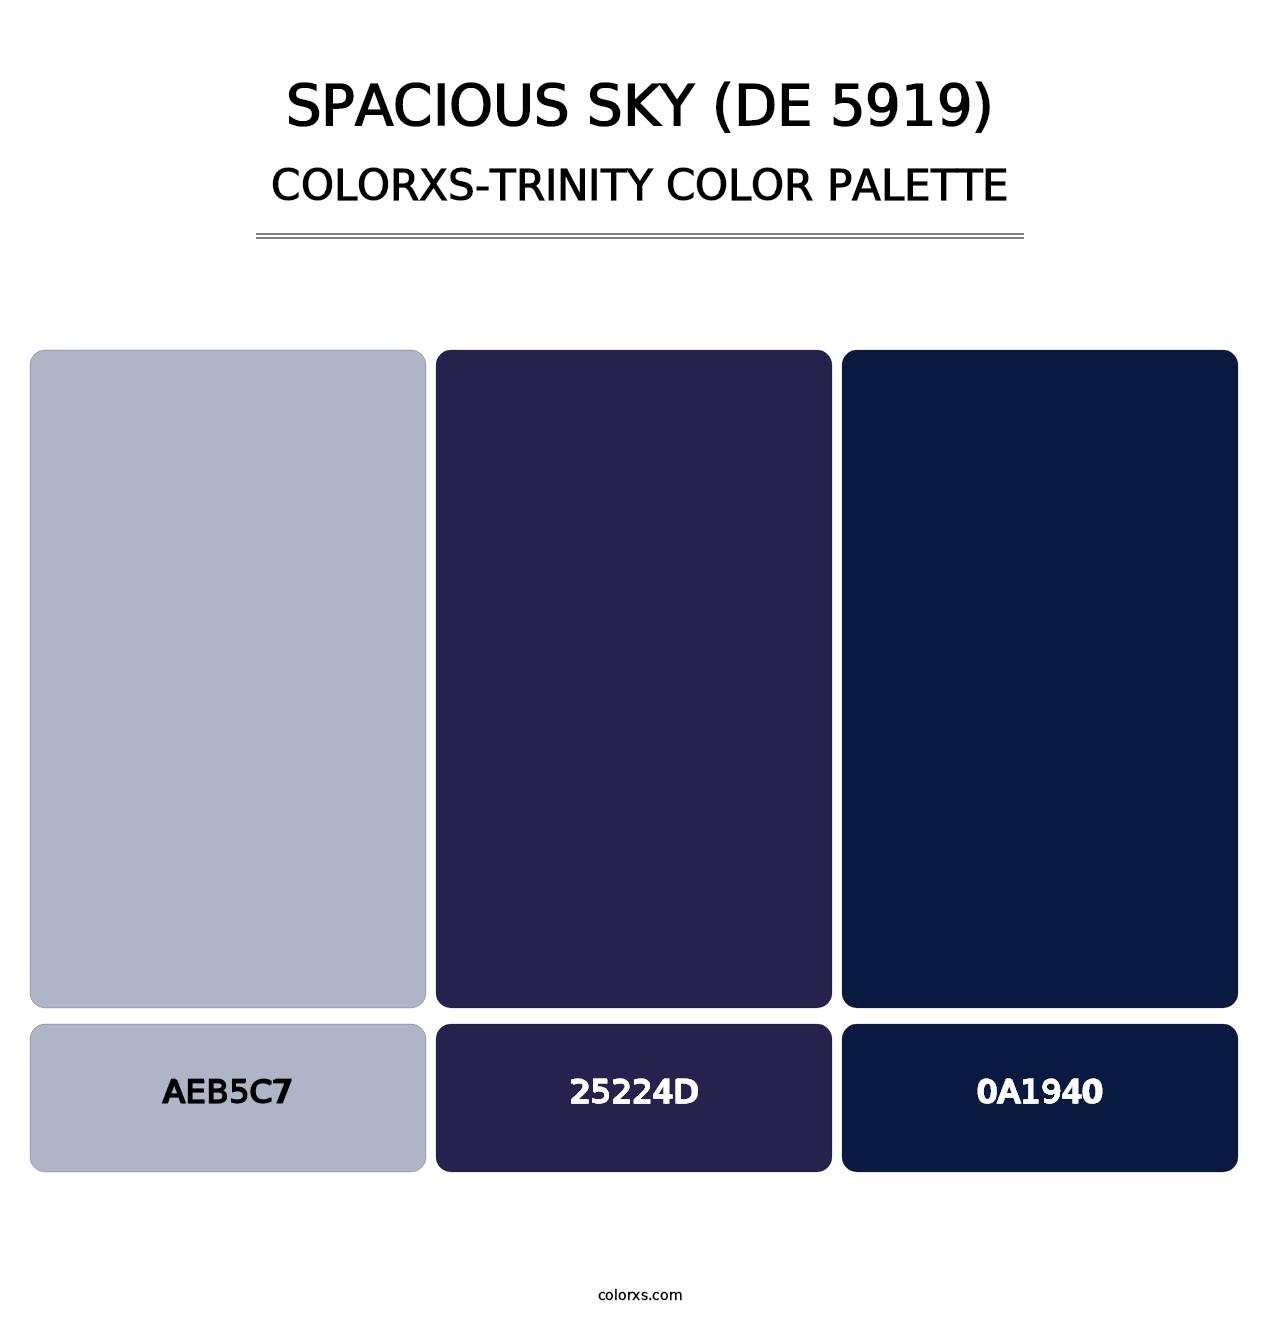 Spacious Sky (DE 5919) - Colorxs Trinity Palette